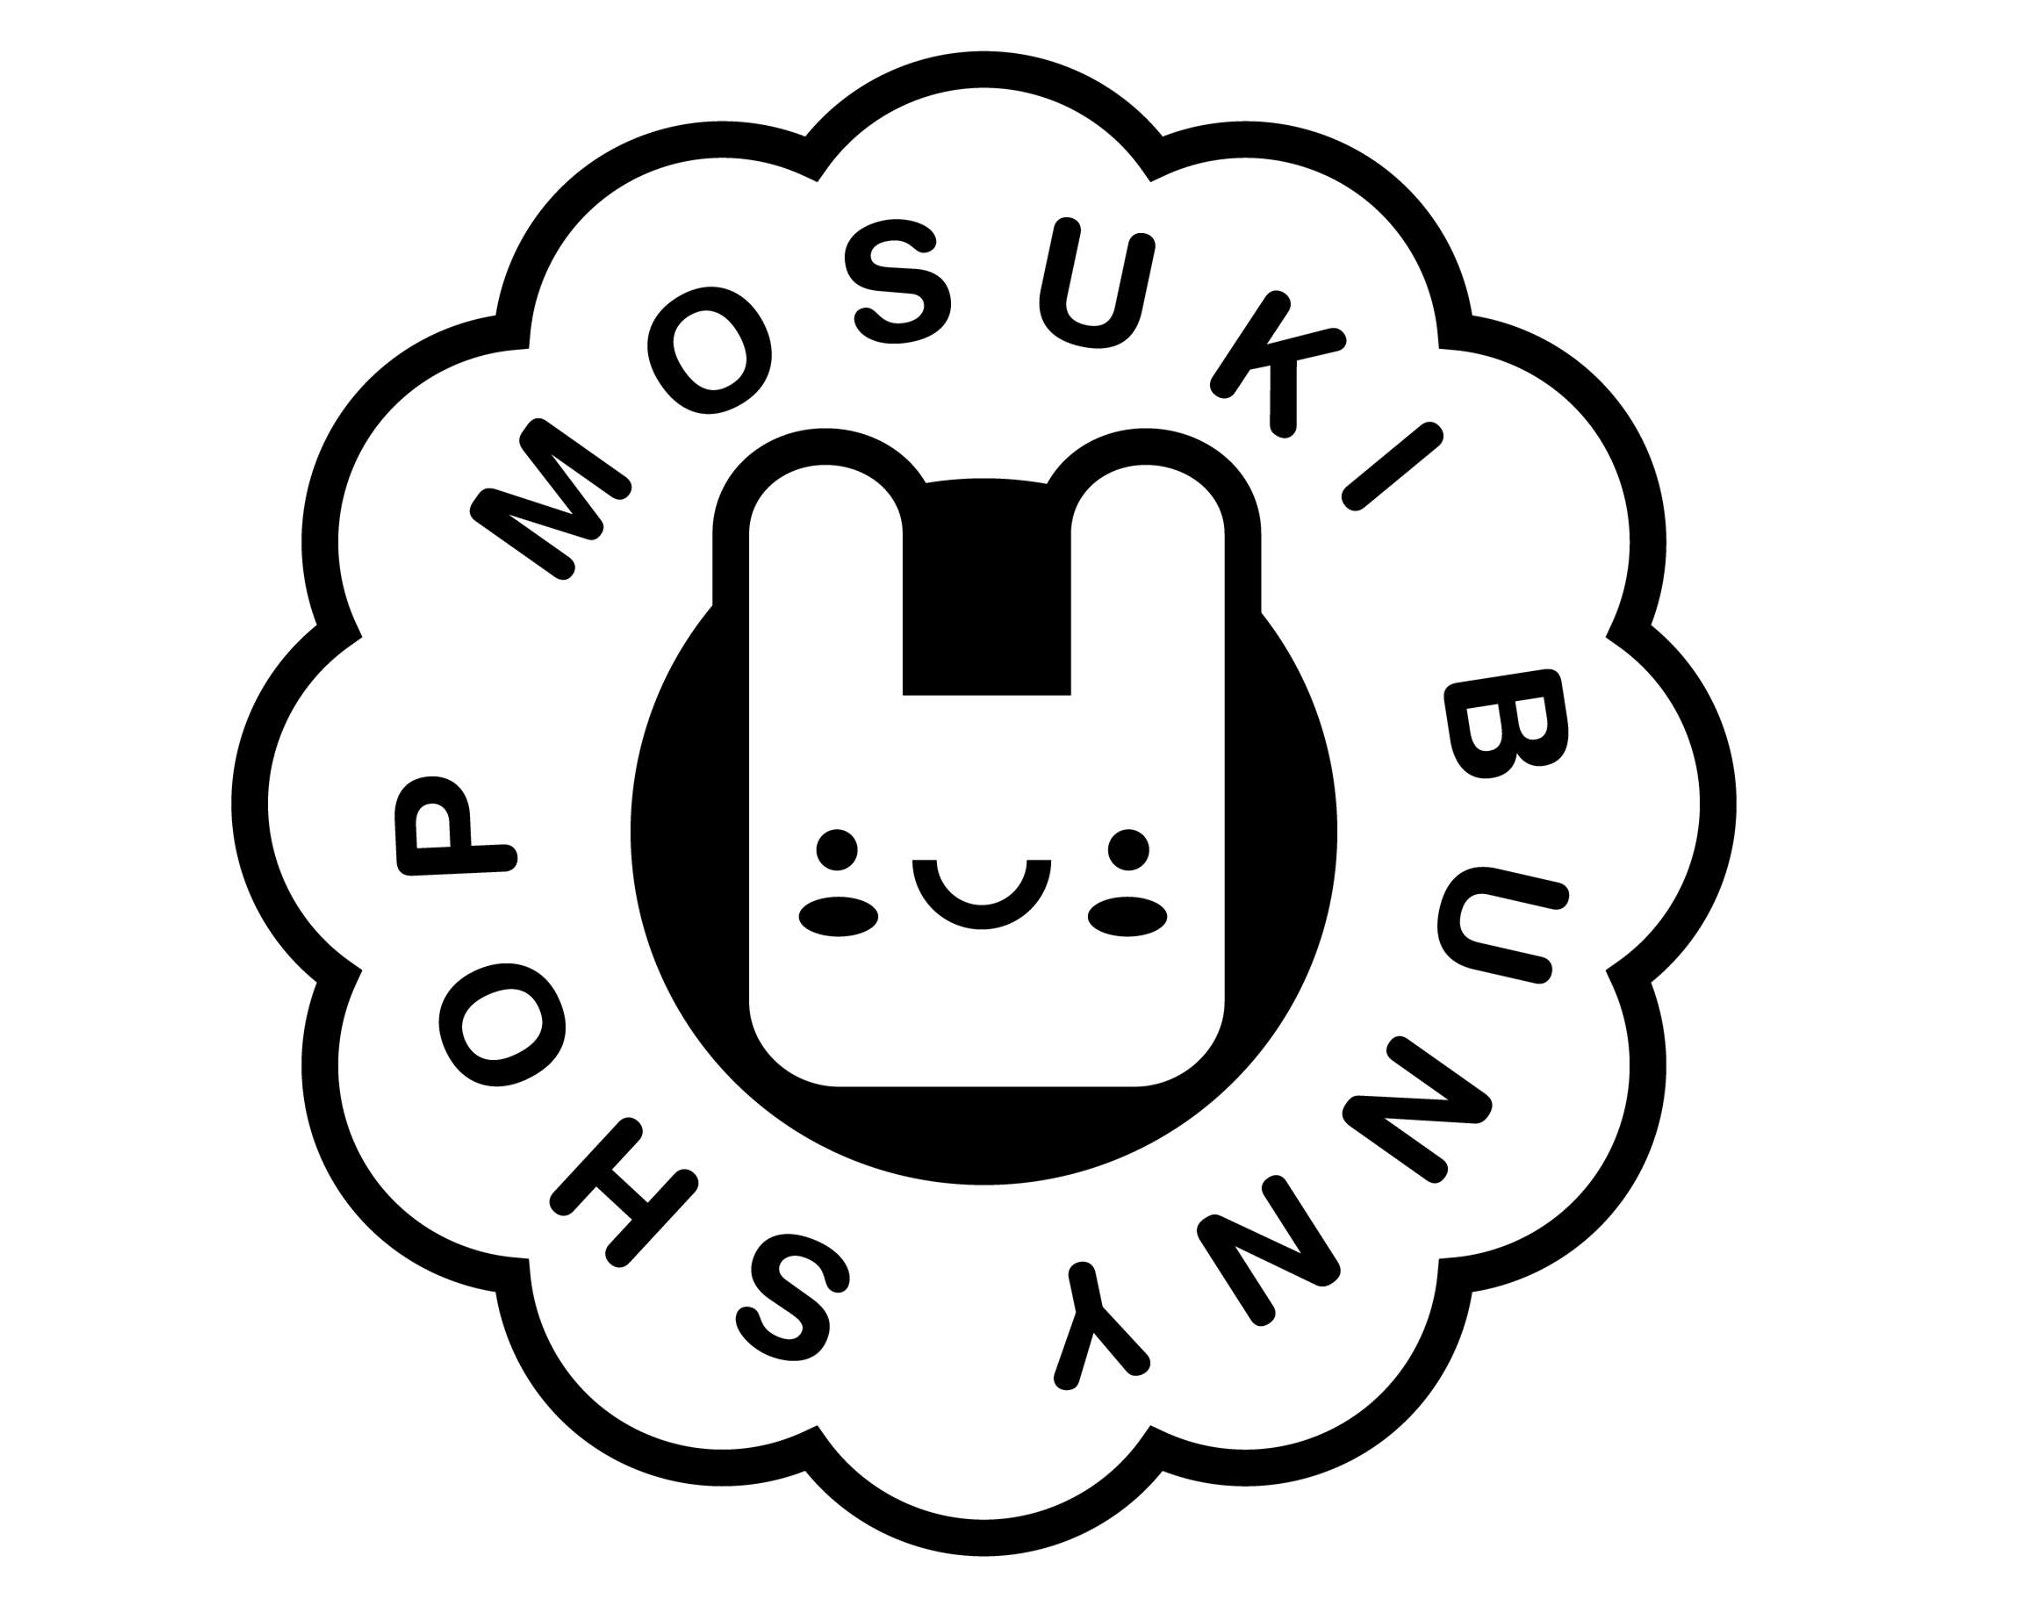 MoSuKi